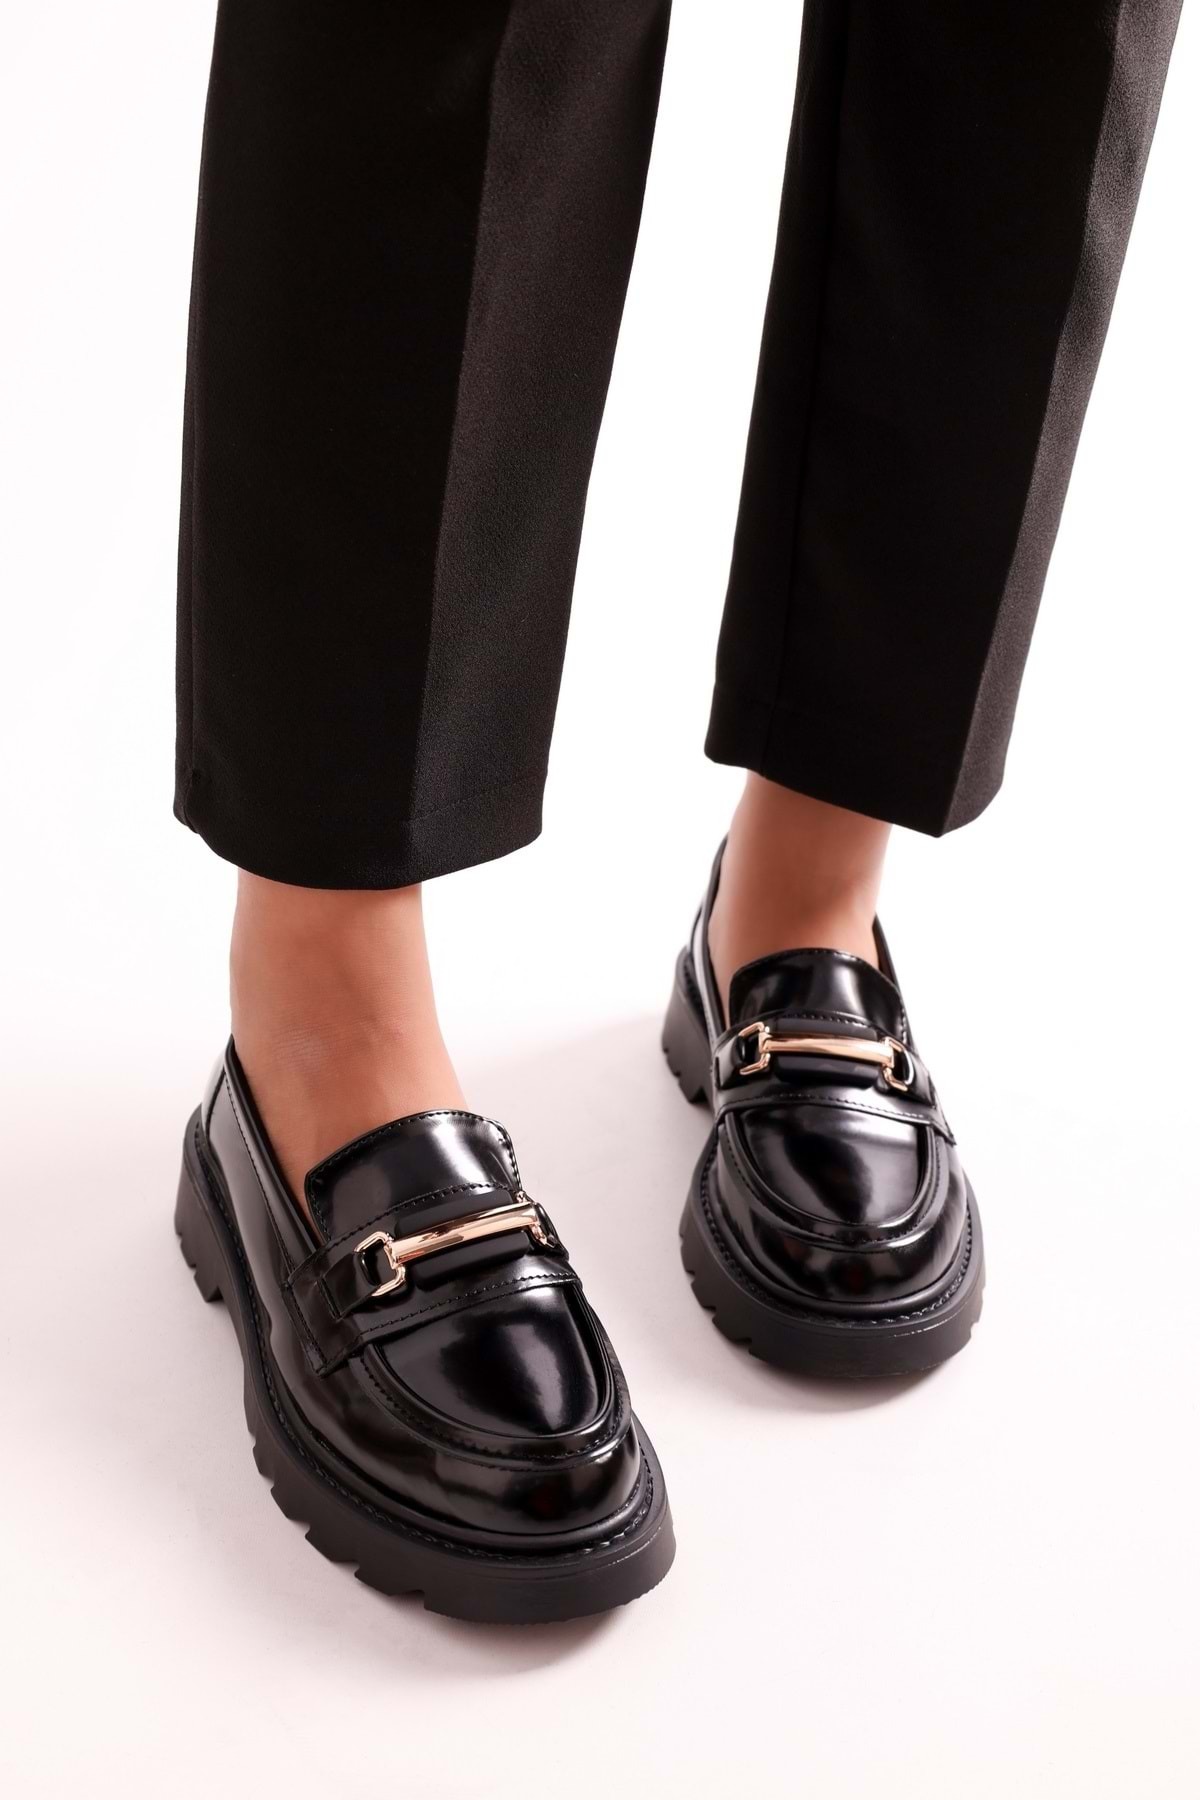 Levně Shoeberry Women's Choc Black Patent Leather Thick Sole Buckle Loafer Black Patent Leather